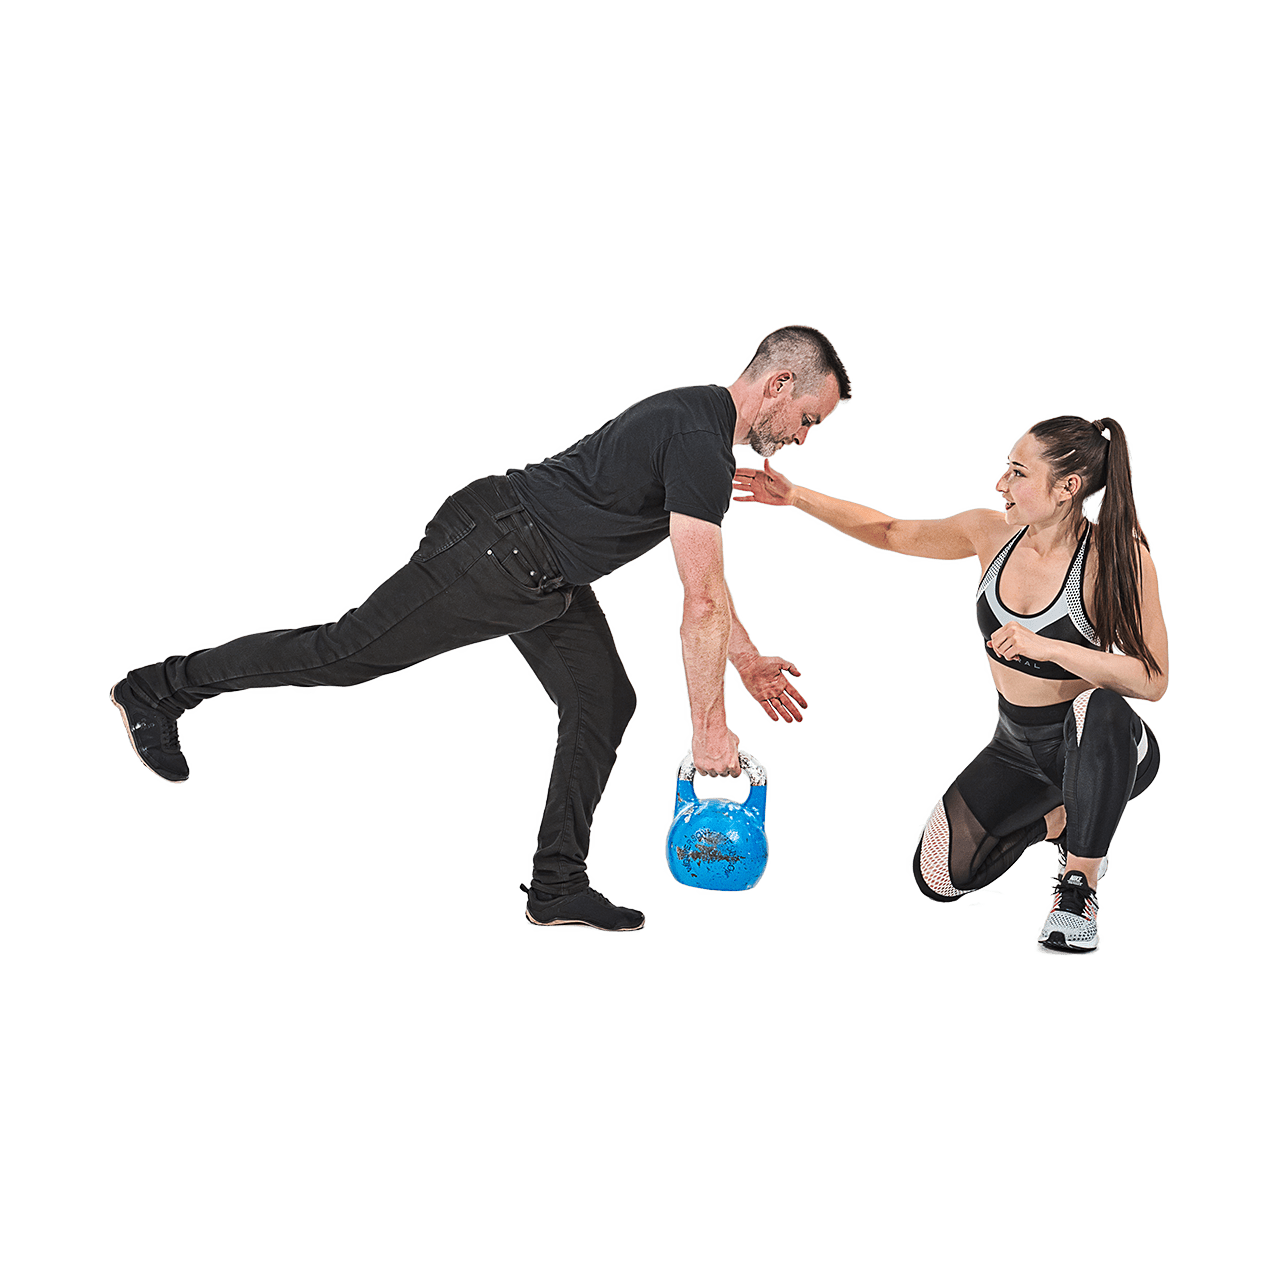 Lizzy teaches Andy a one-legged deadlift